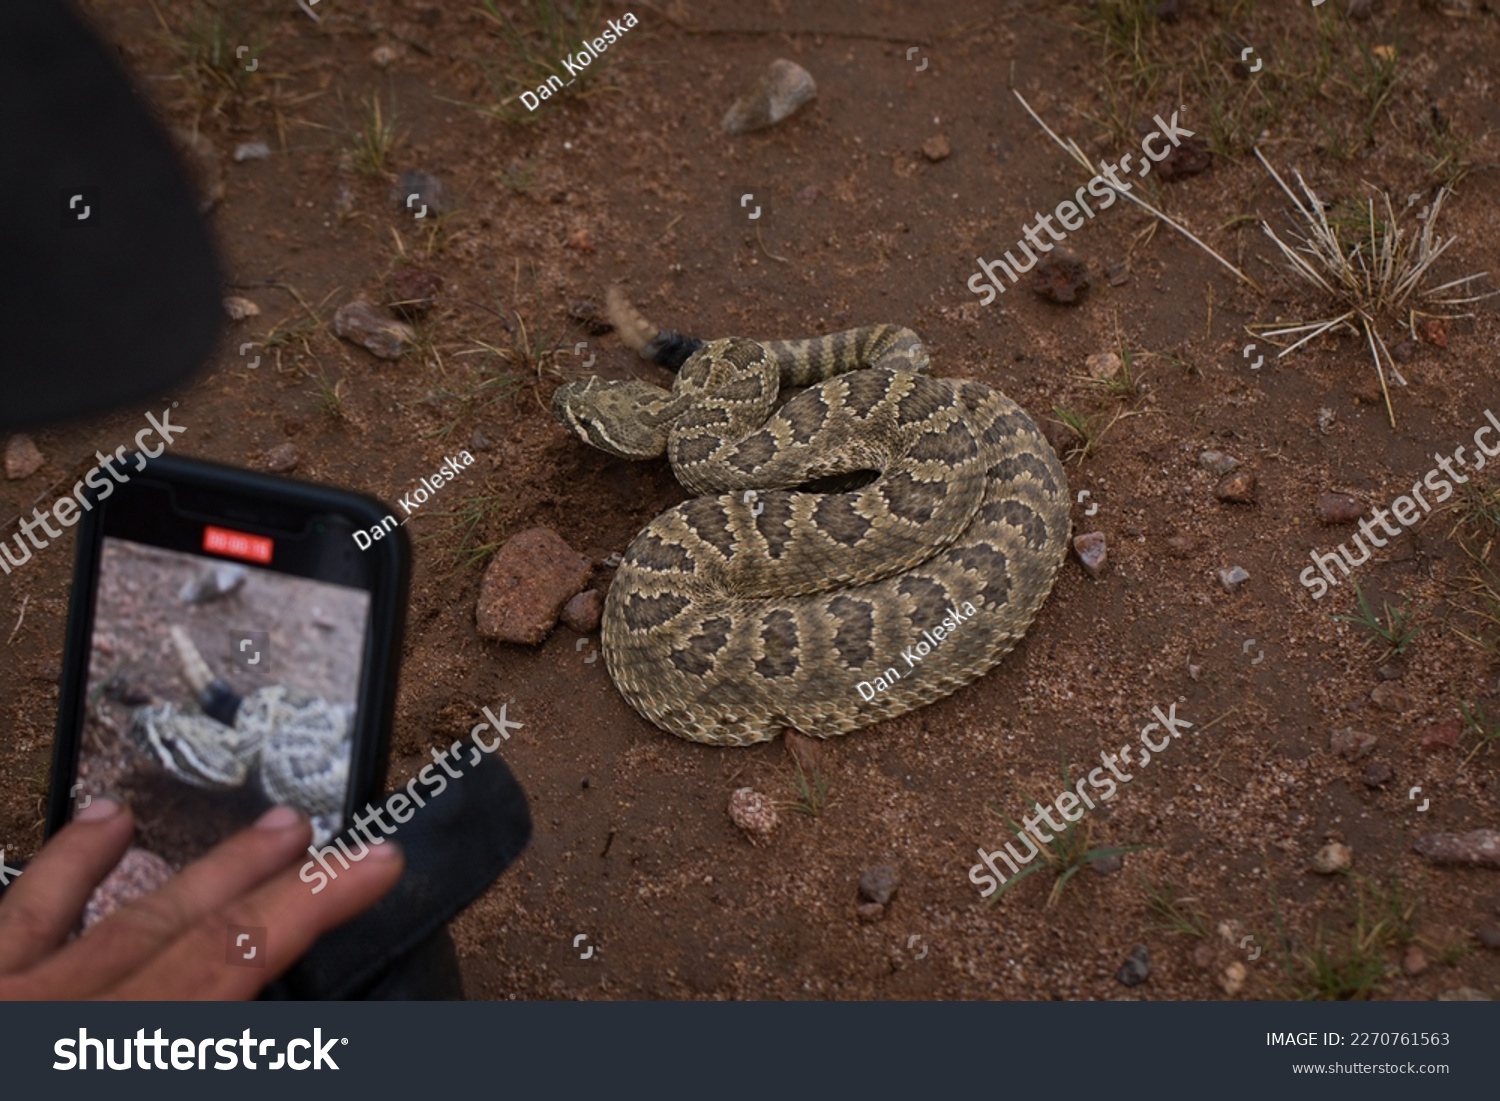 Mojave rattlesnake (Crotalus scutulatus) from S Arizona, USA #2270761563